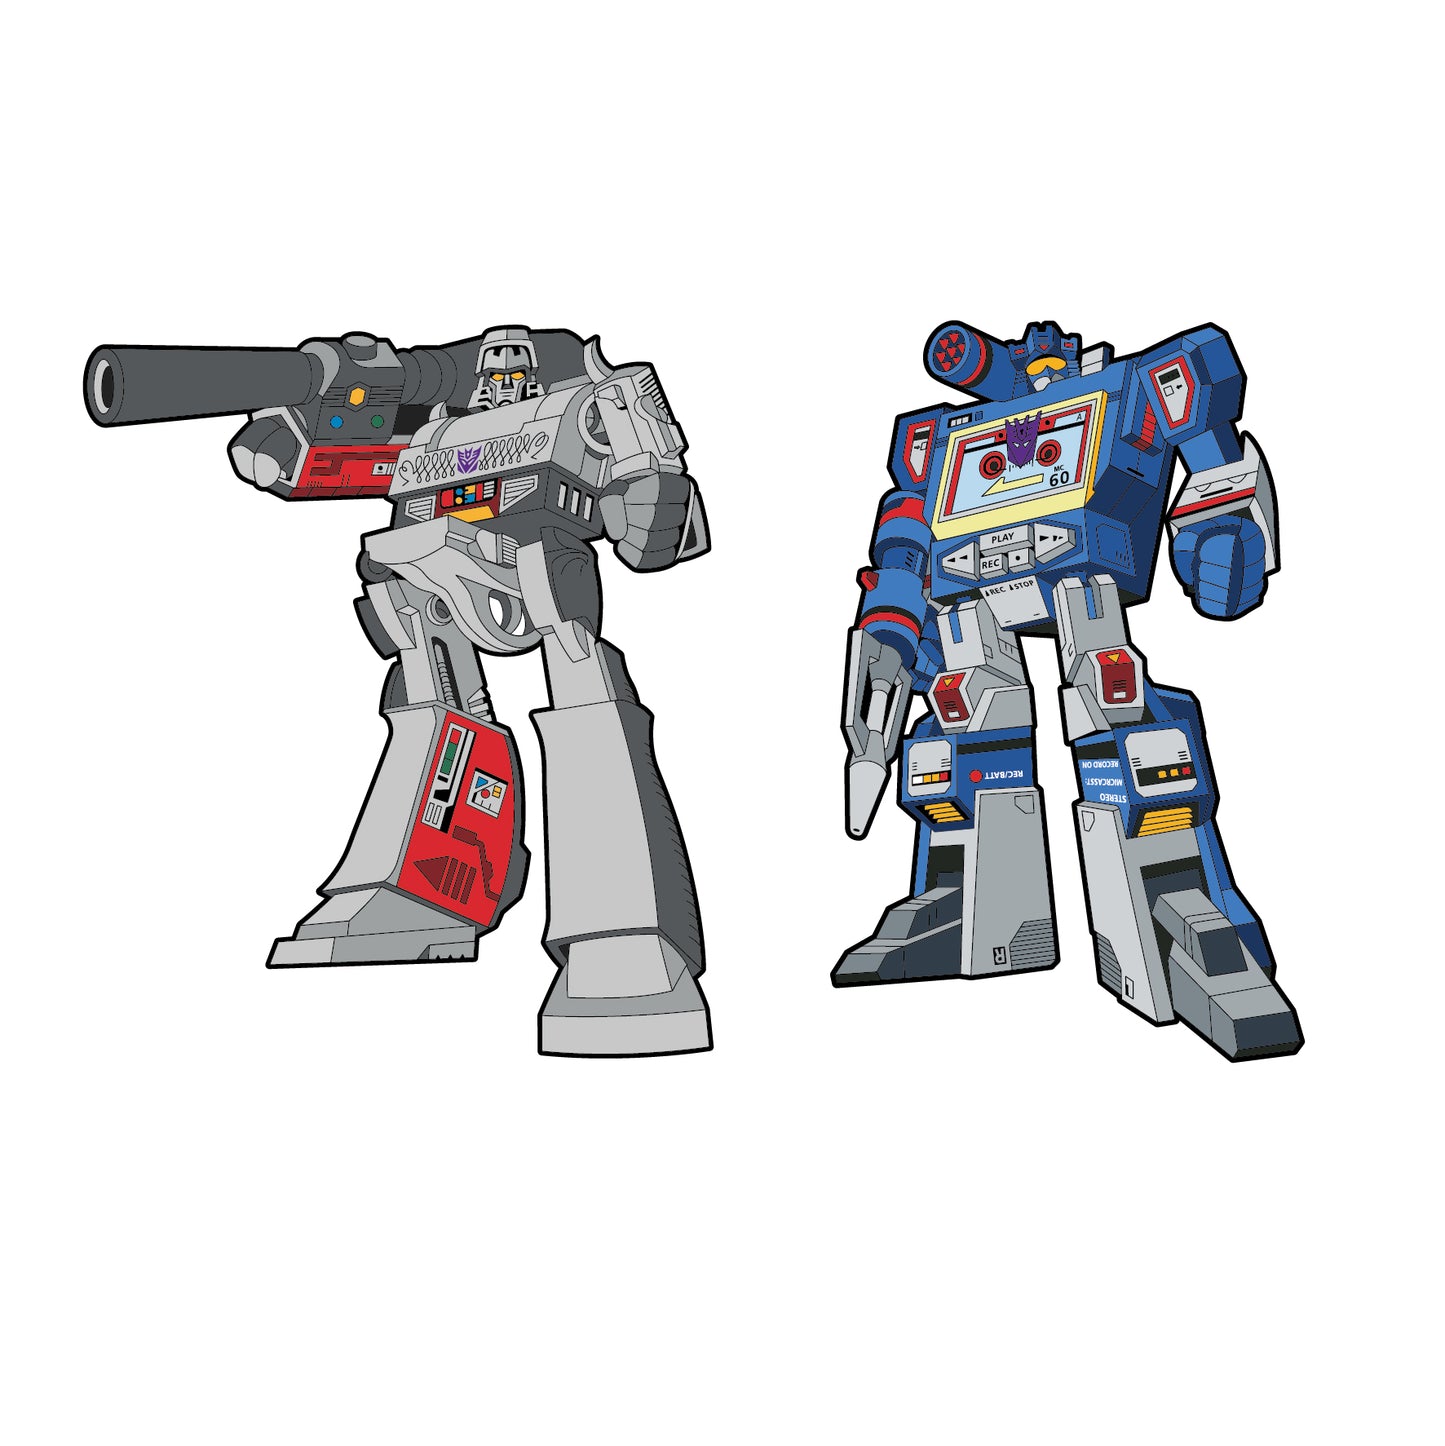 Transformers Megatron X Soundwave Retro Pin Set - Available 3rd Quarter 2021 - Icon Heroes 